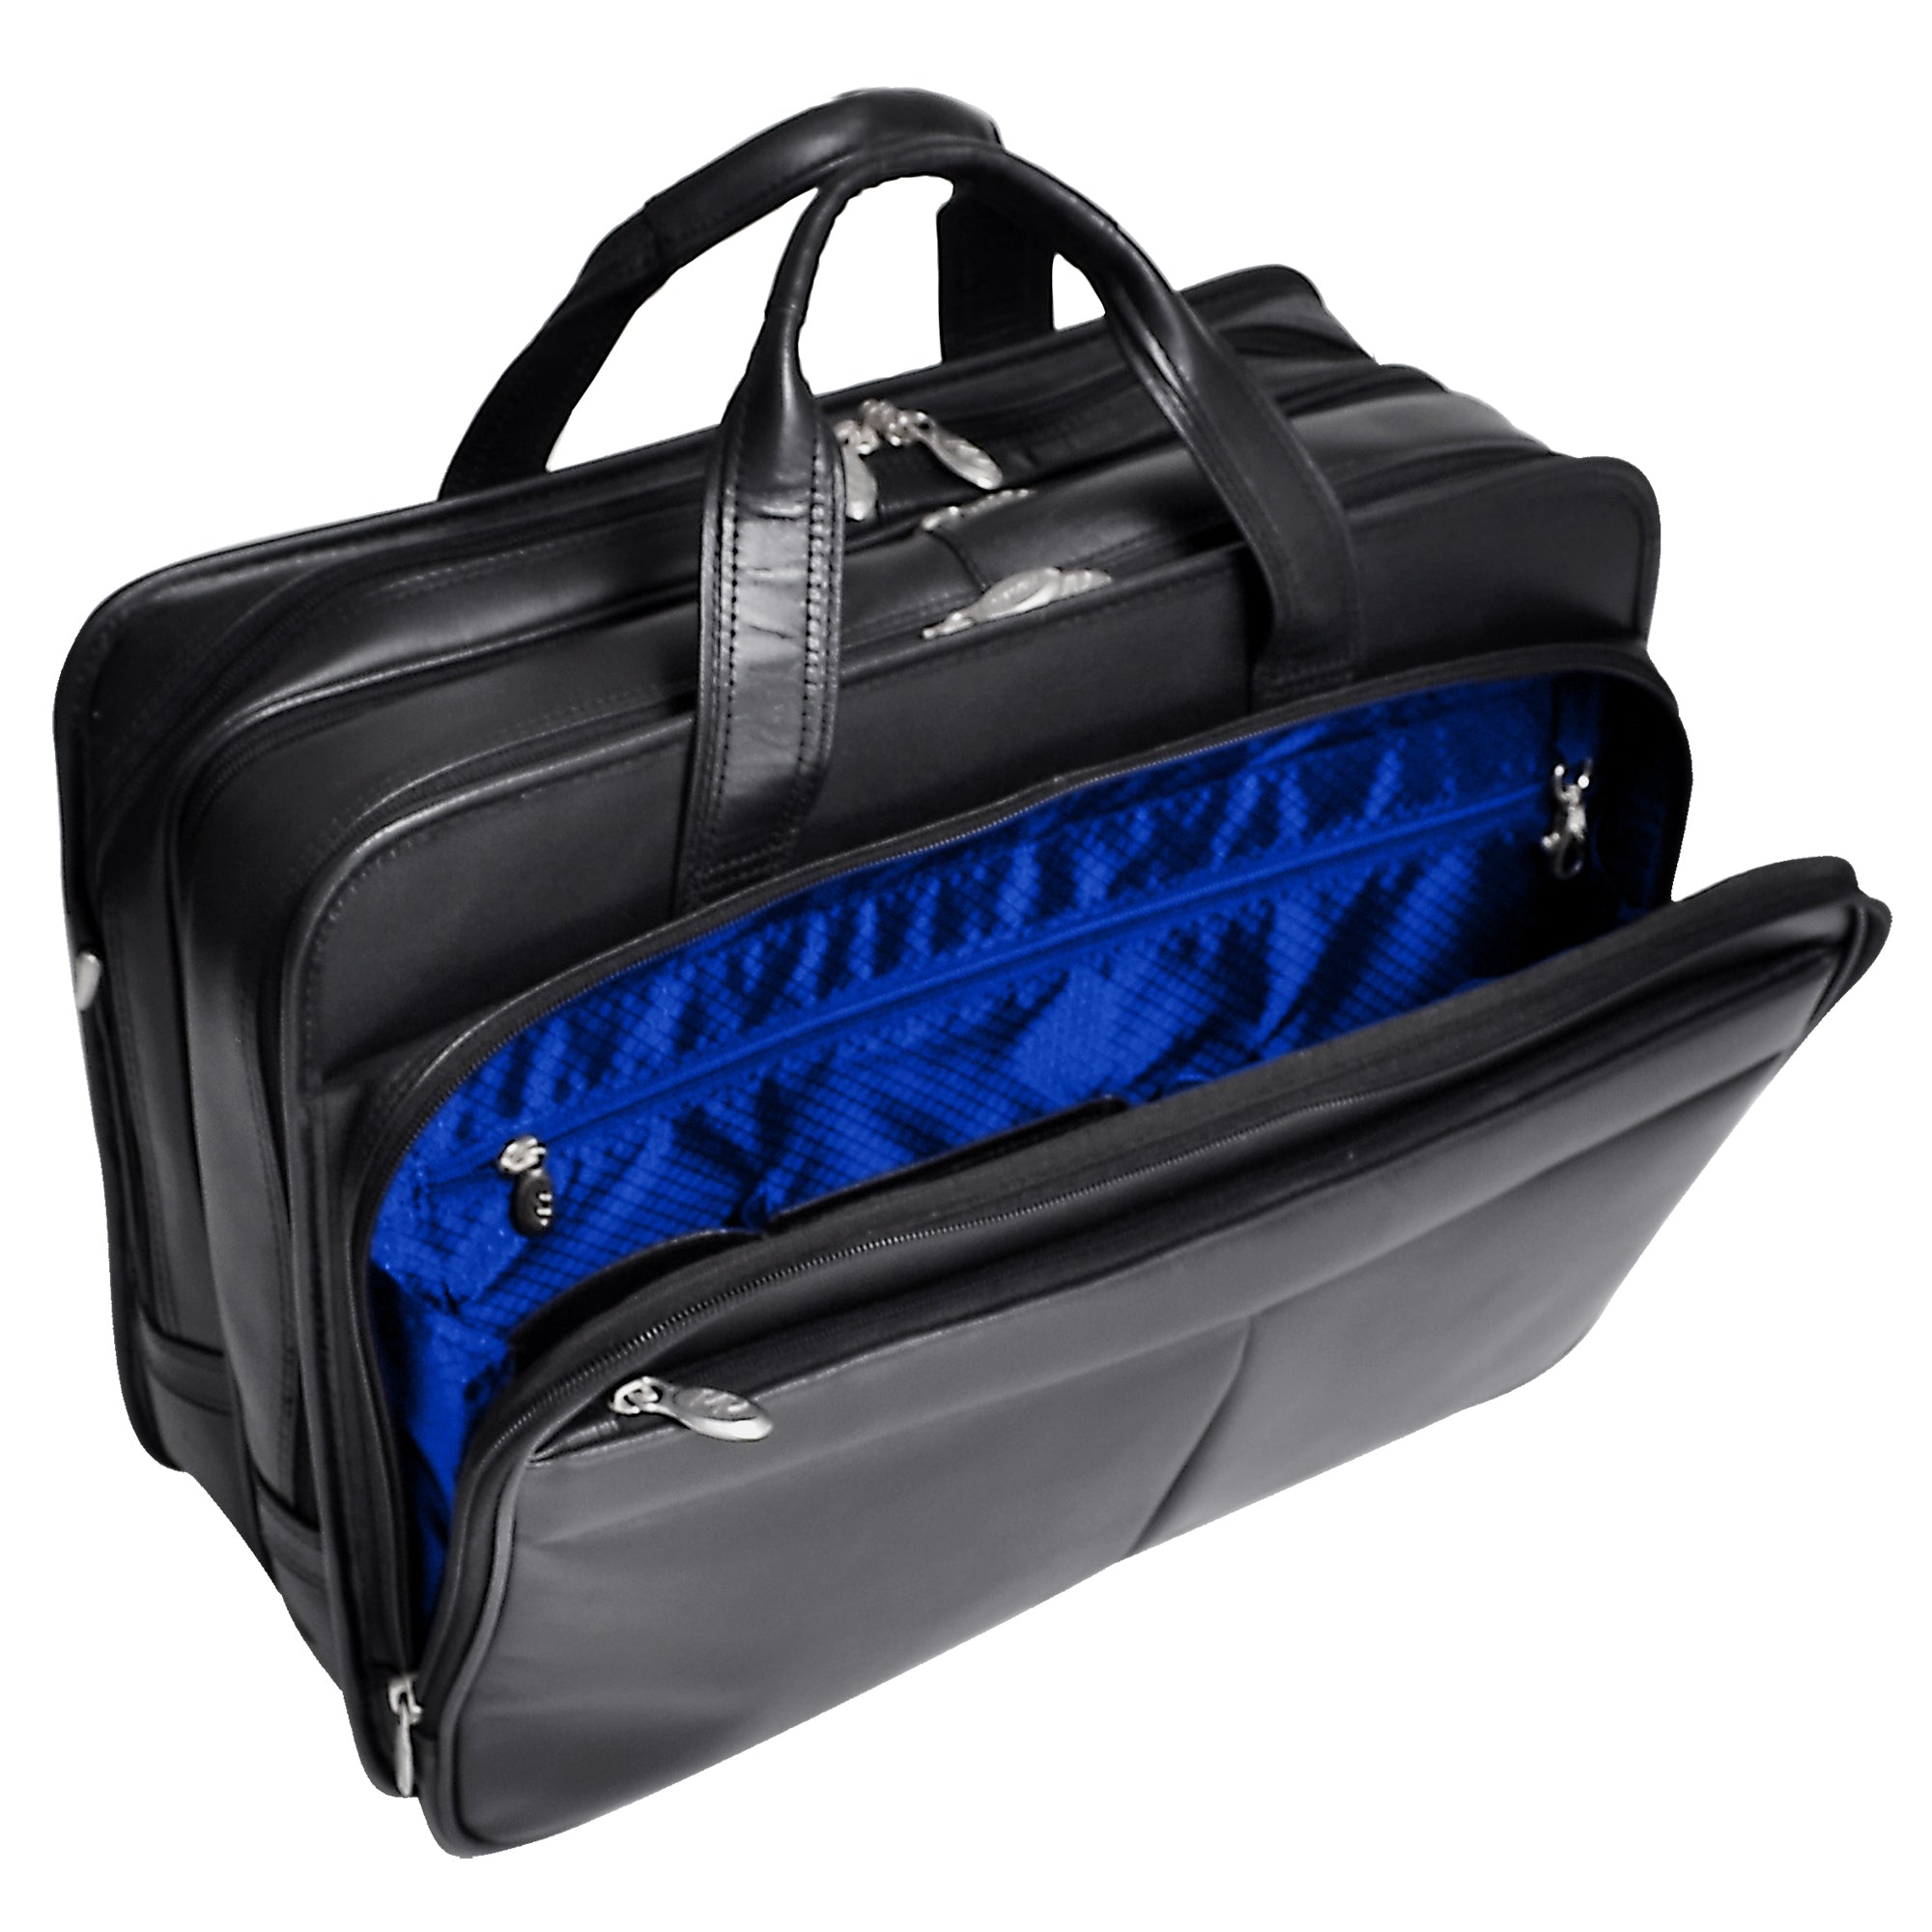 McKlein WALTON 17" Leather Expandable Double Compartment Laptop Briefcase w/ Removable Sleeve